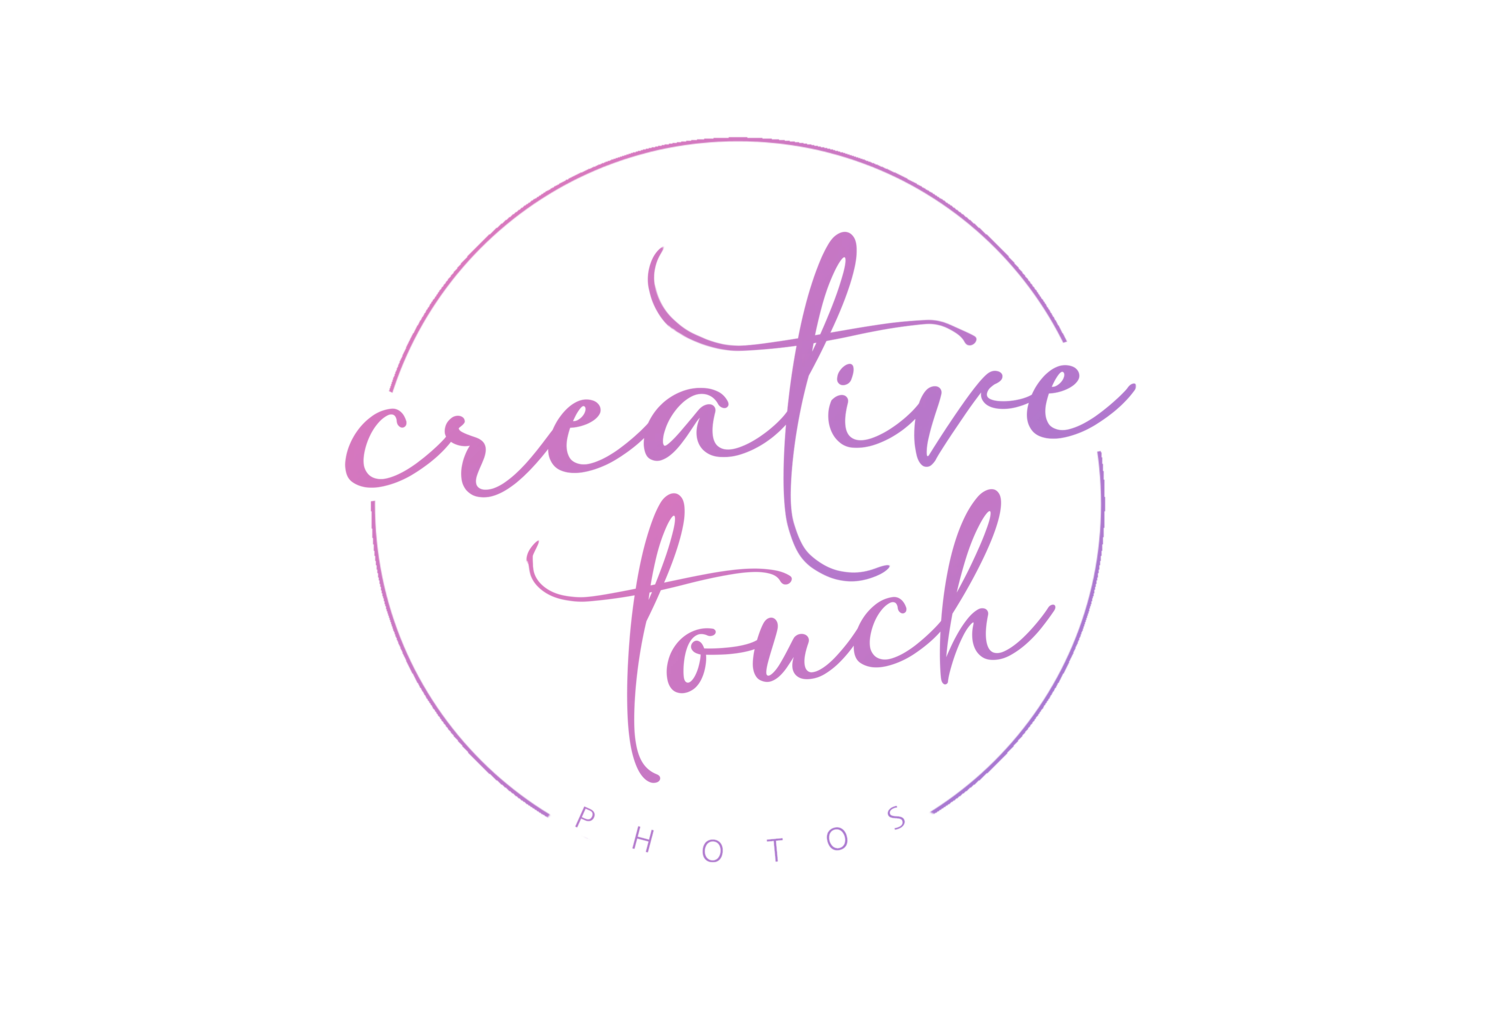 Creative Touch Photos, LLC.